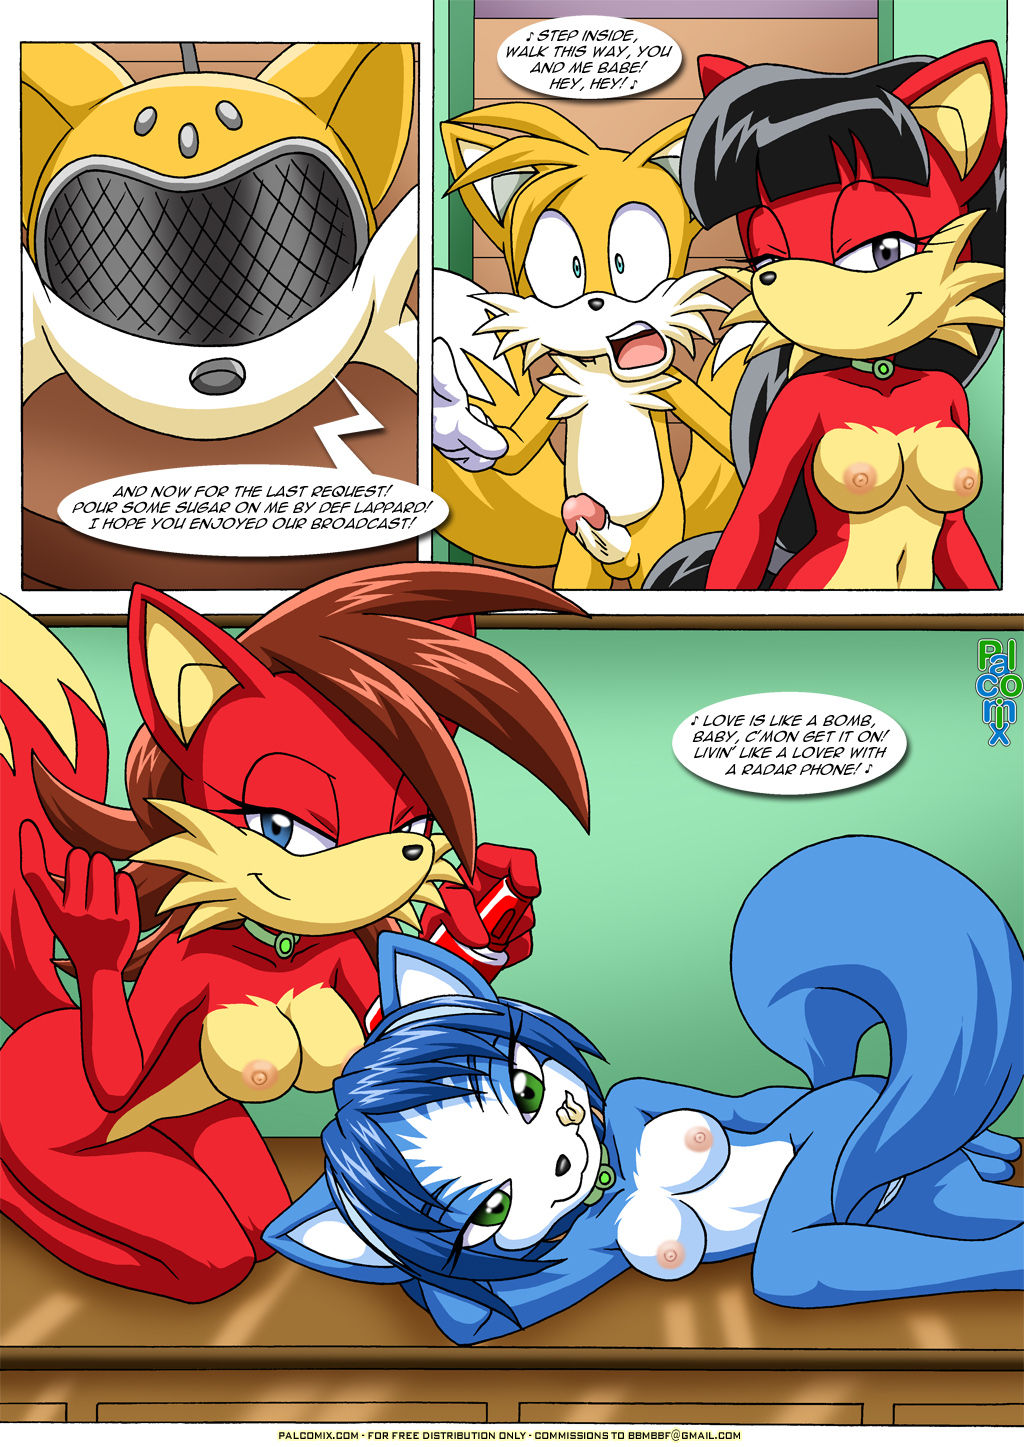 Palcomix FoXXXes (Sonic the Hedgehog, Star Fox) 31 / 39.